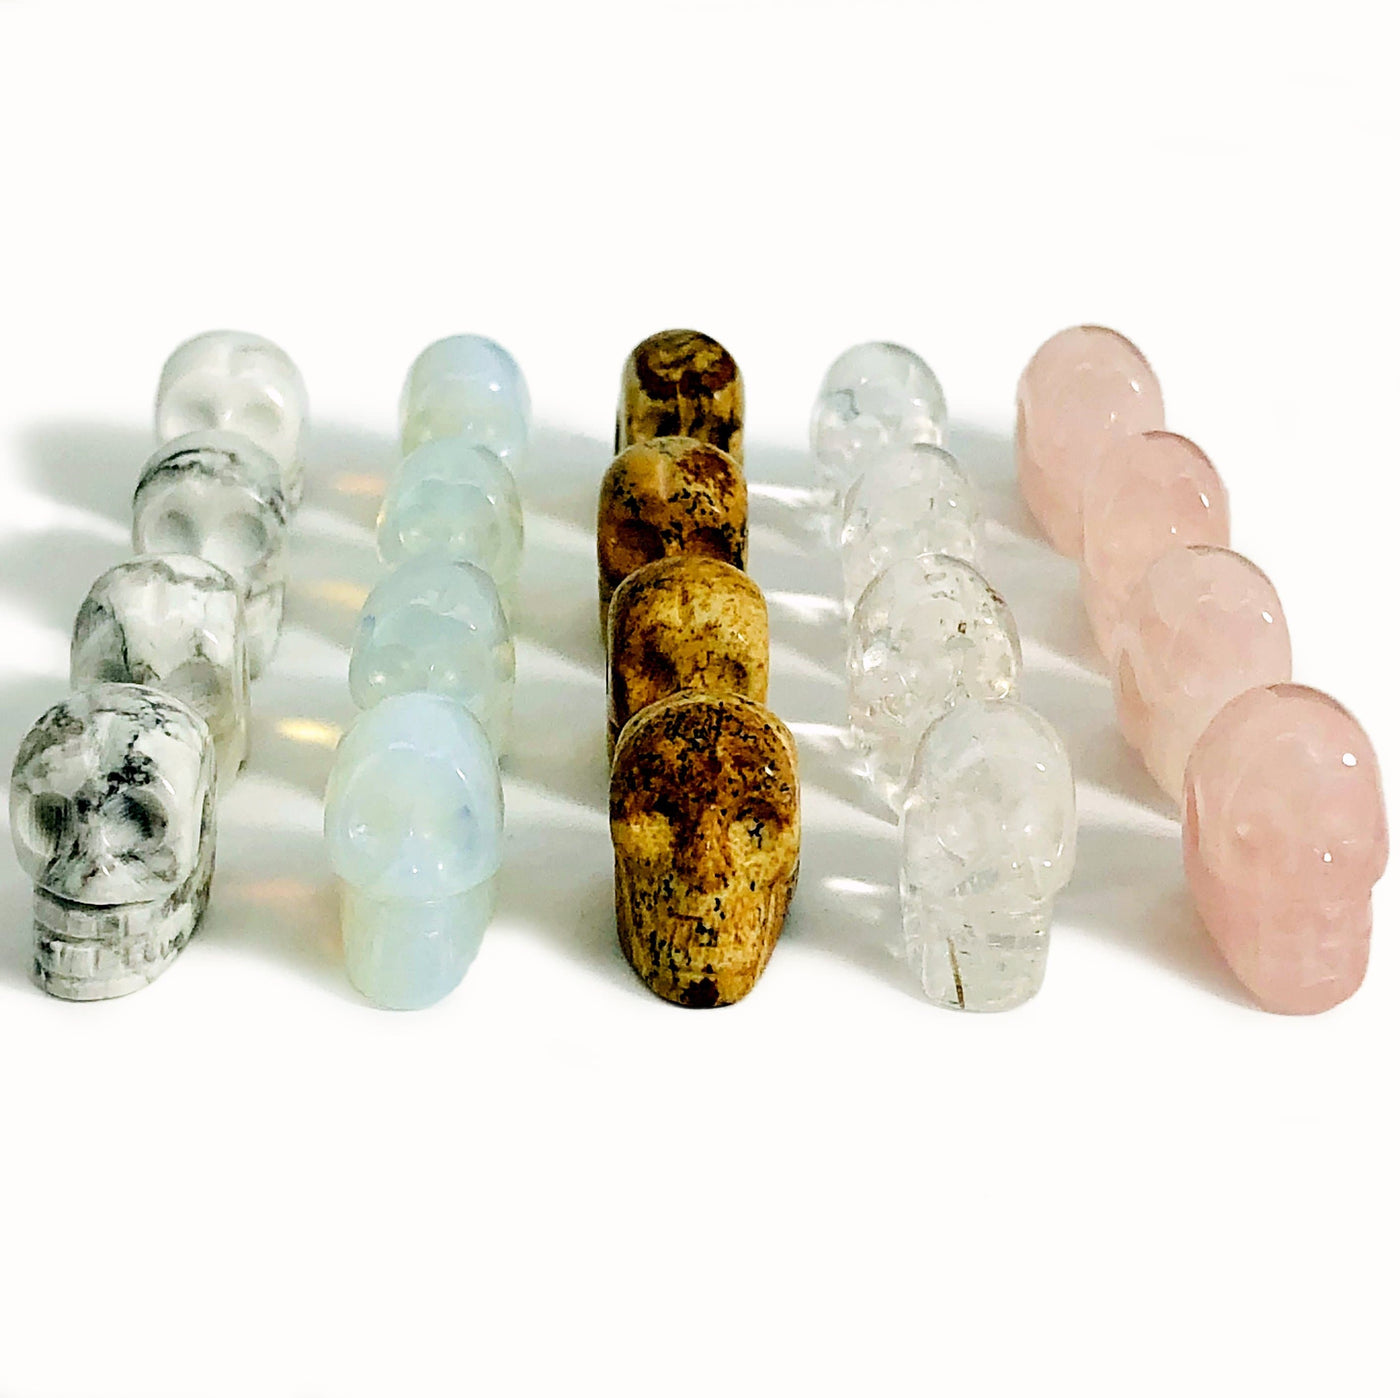 white howlite, opalite, picture jasper, crystal quartz, and rose quartz skull beads in rows on white background